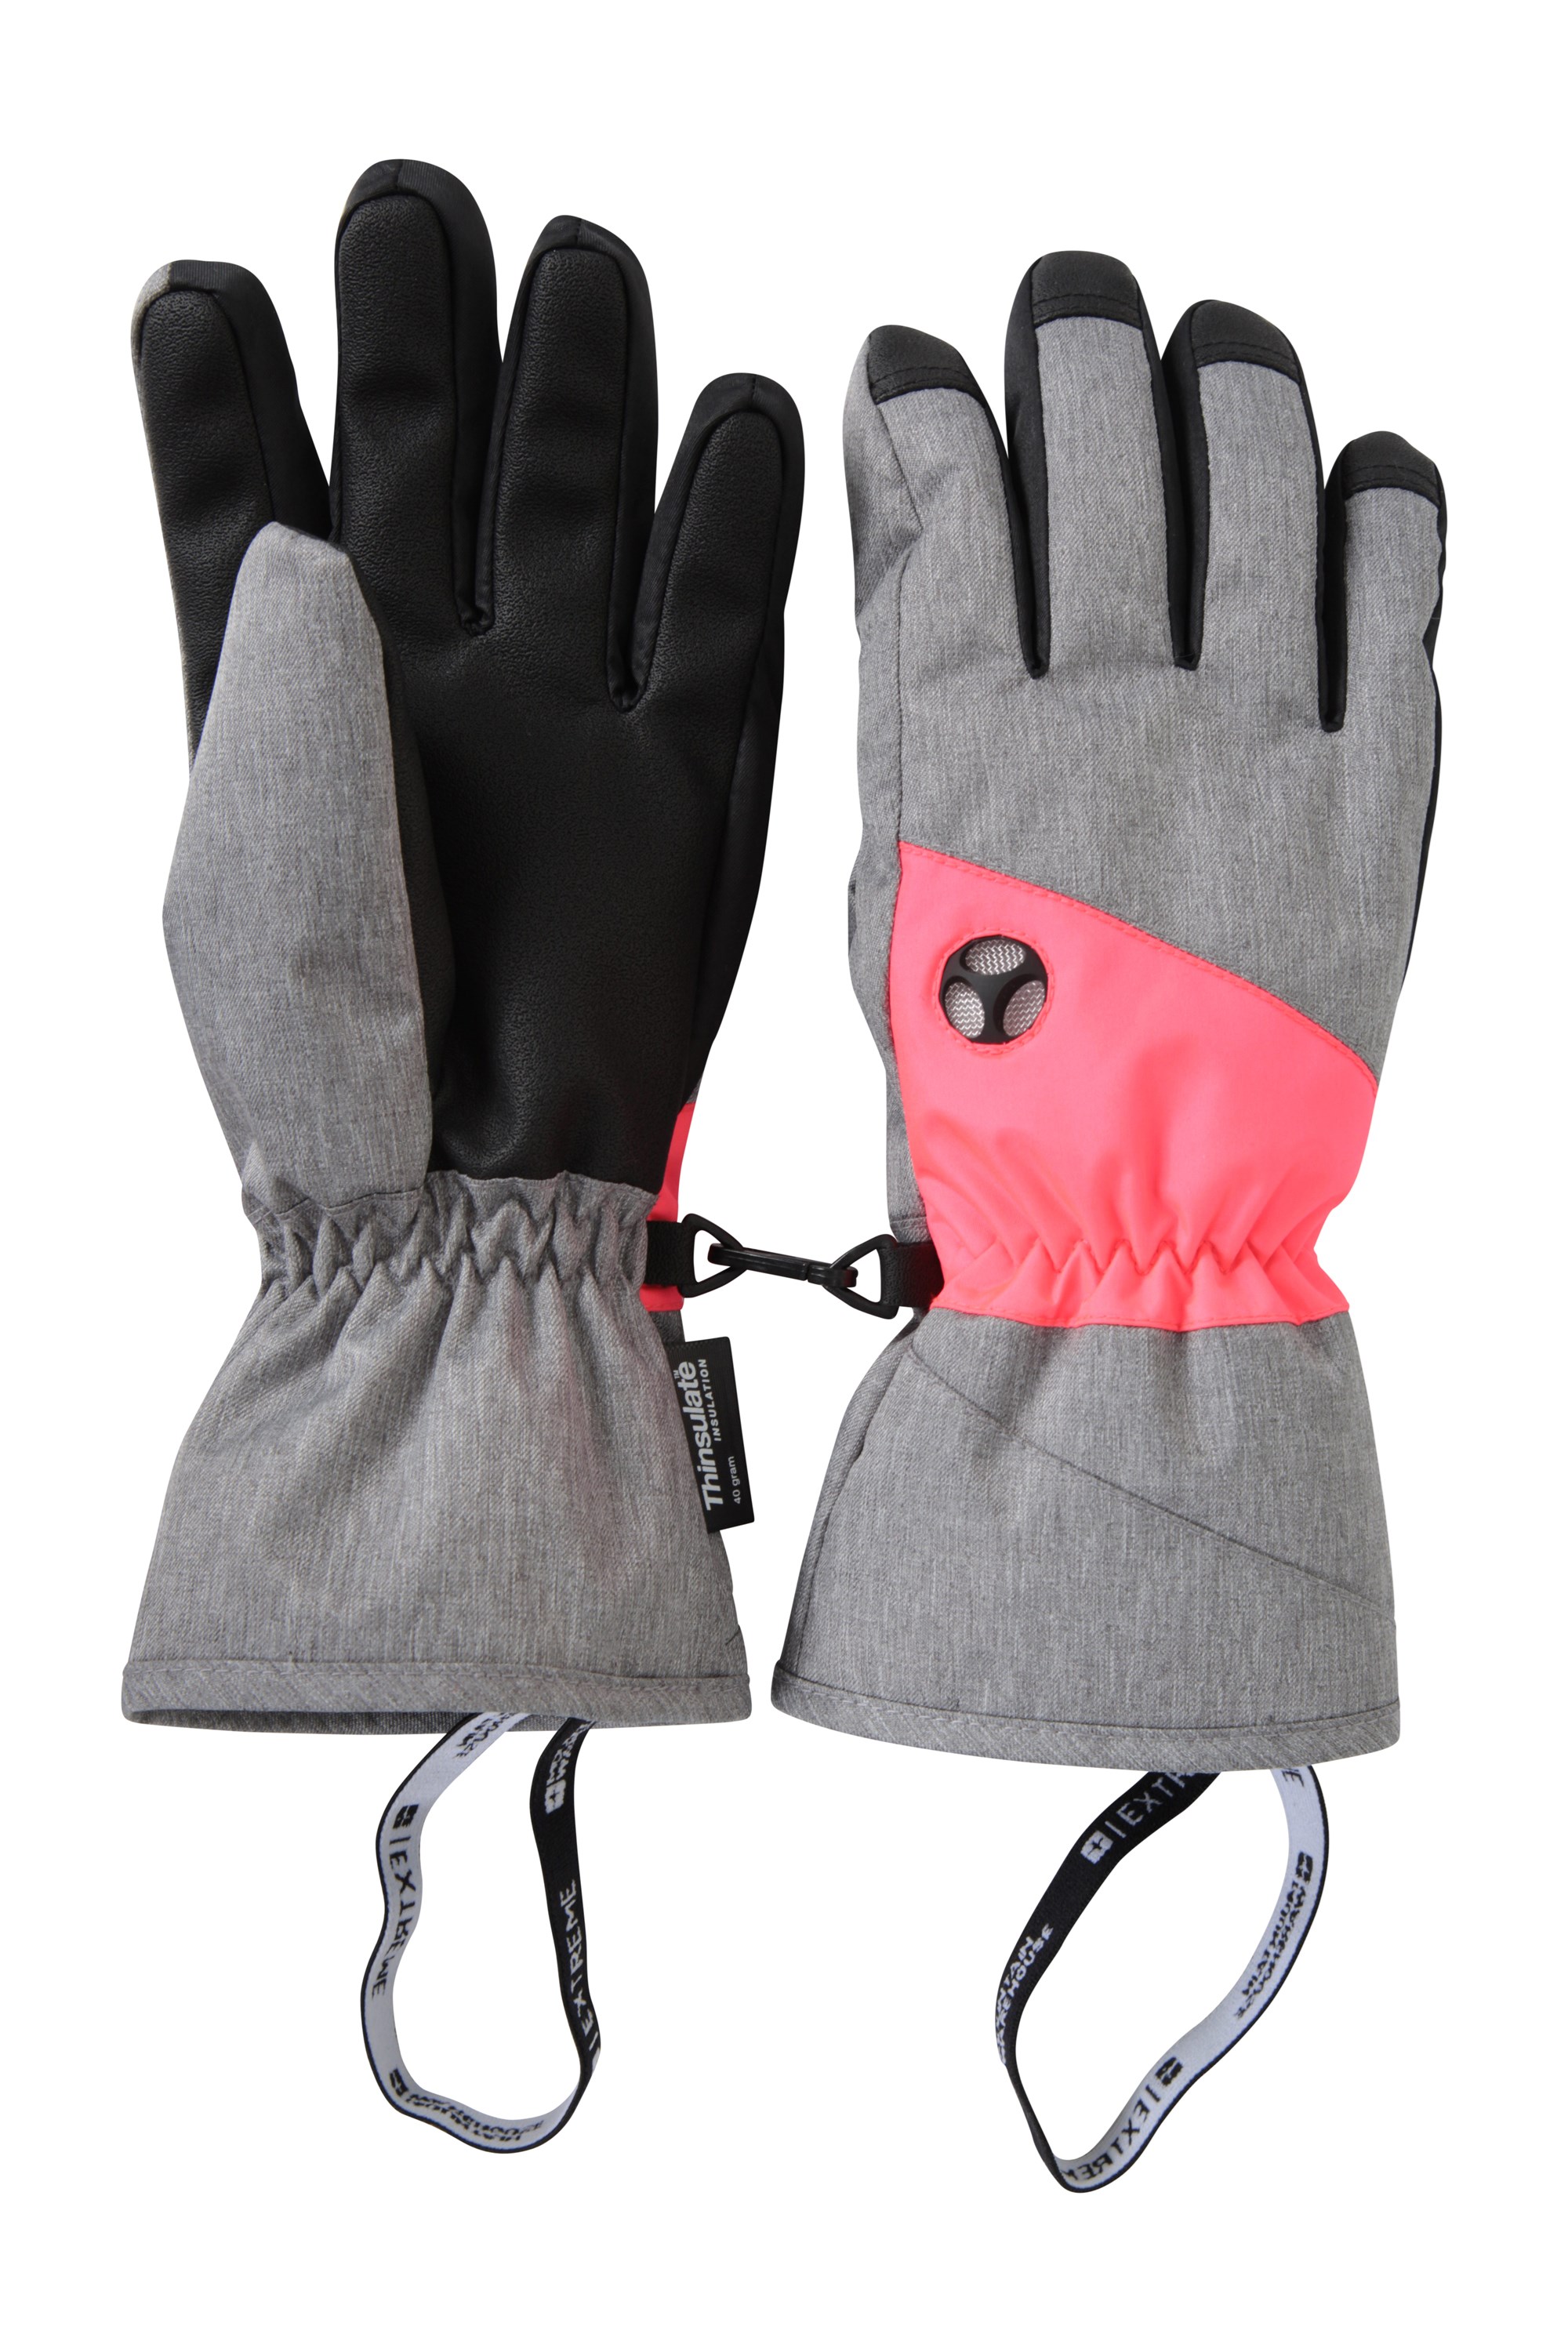 ski glove deals